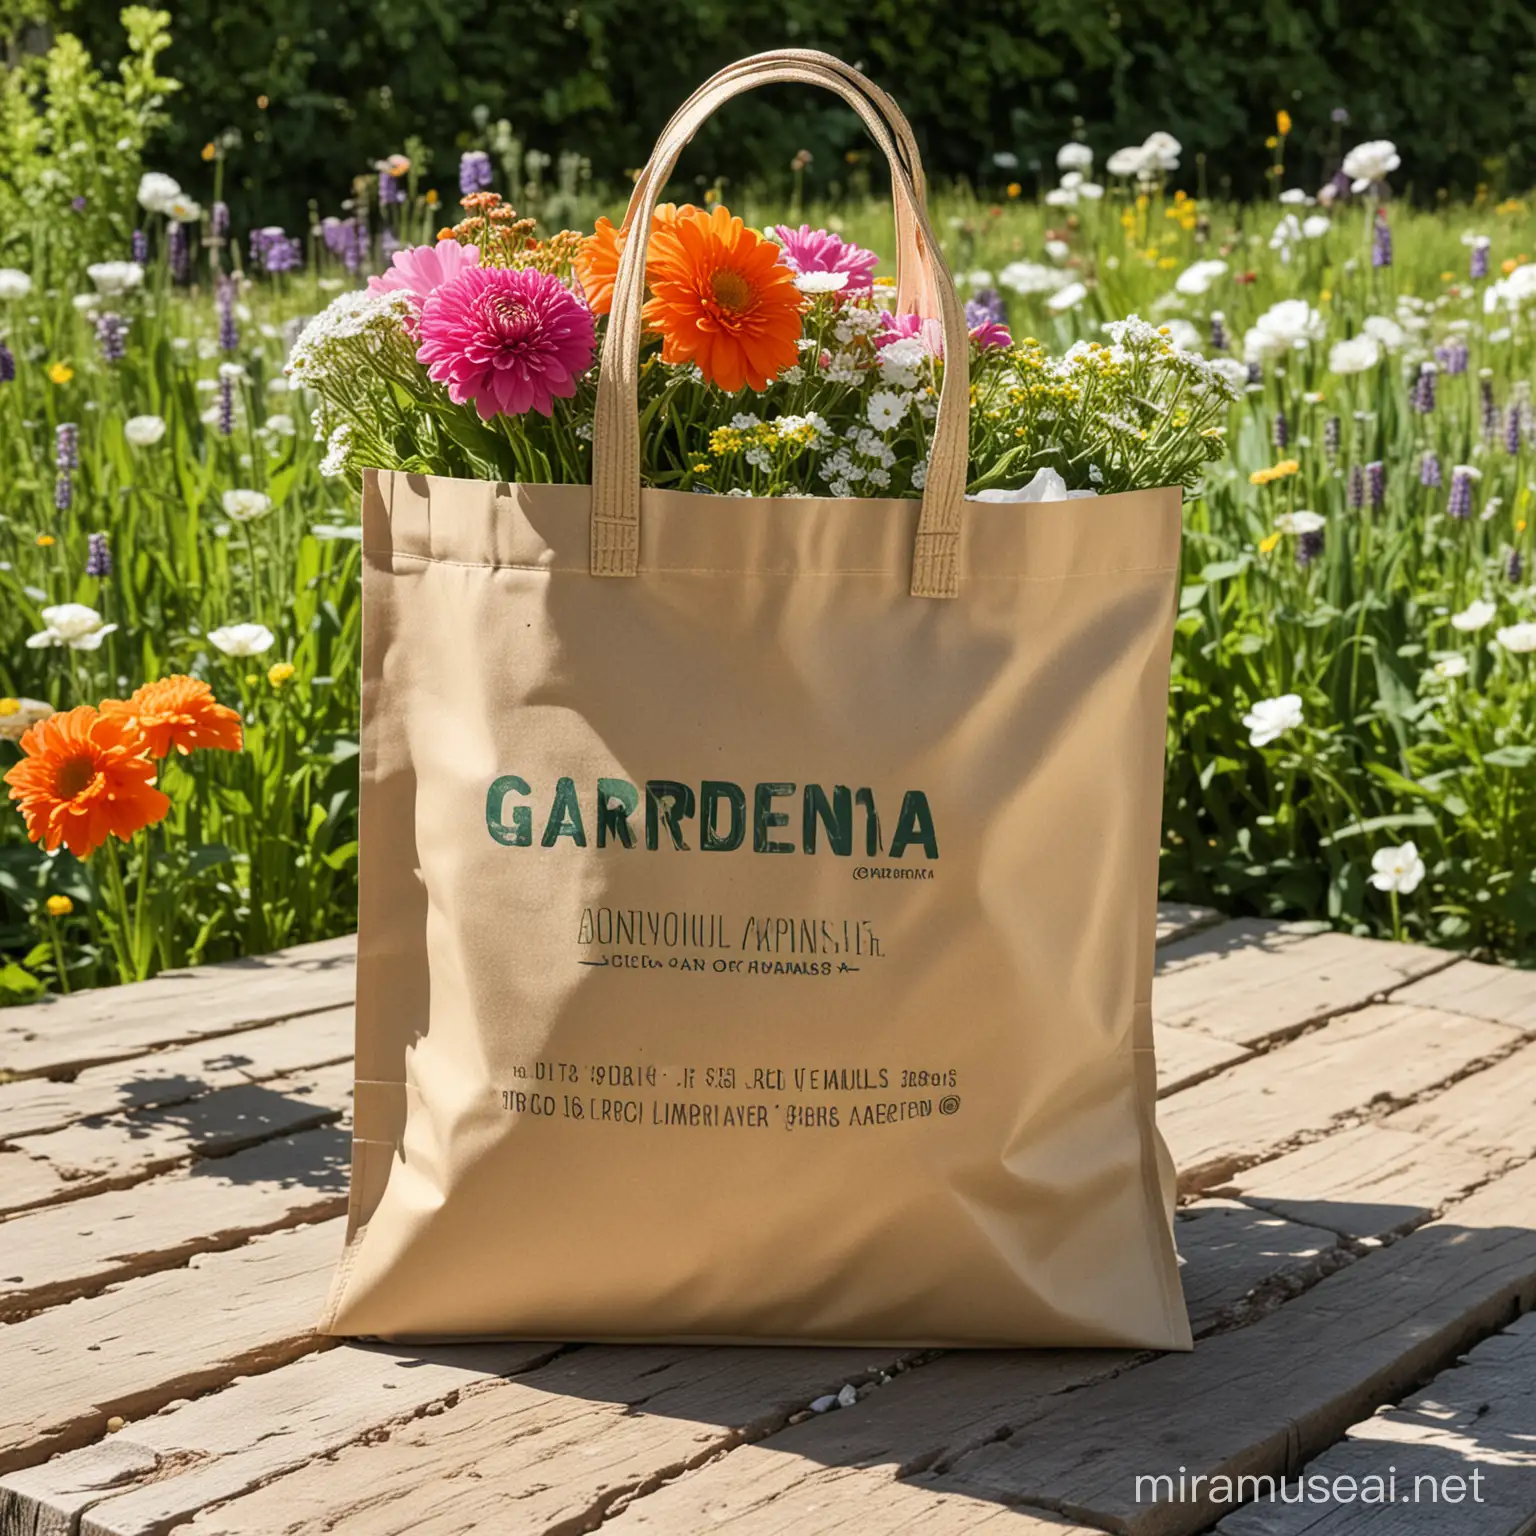 GARDENA Goodie Bag on Lush Garden Table in Sunny Weather